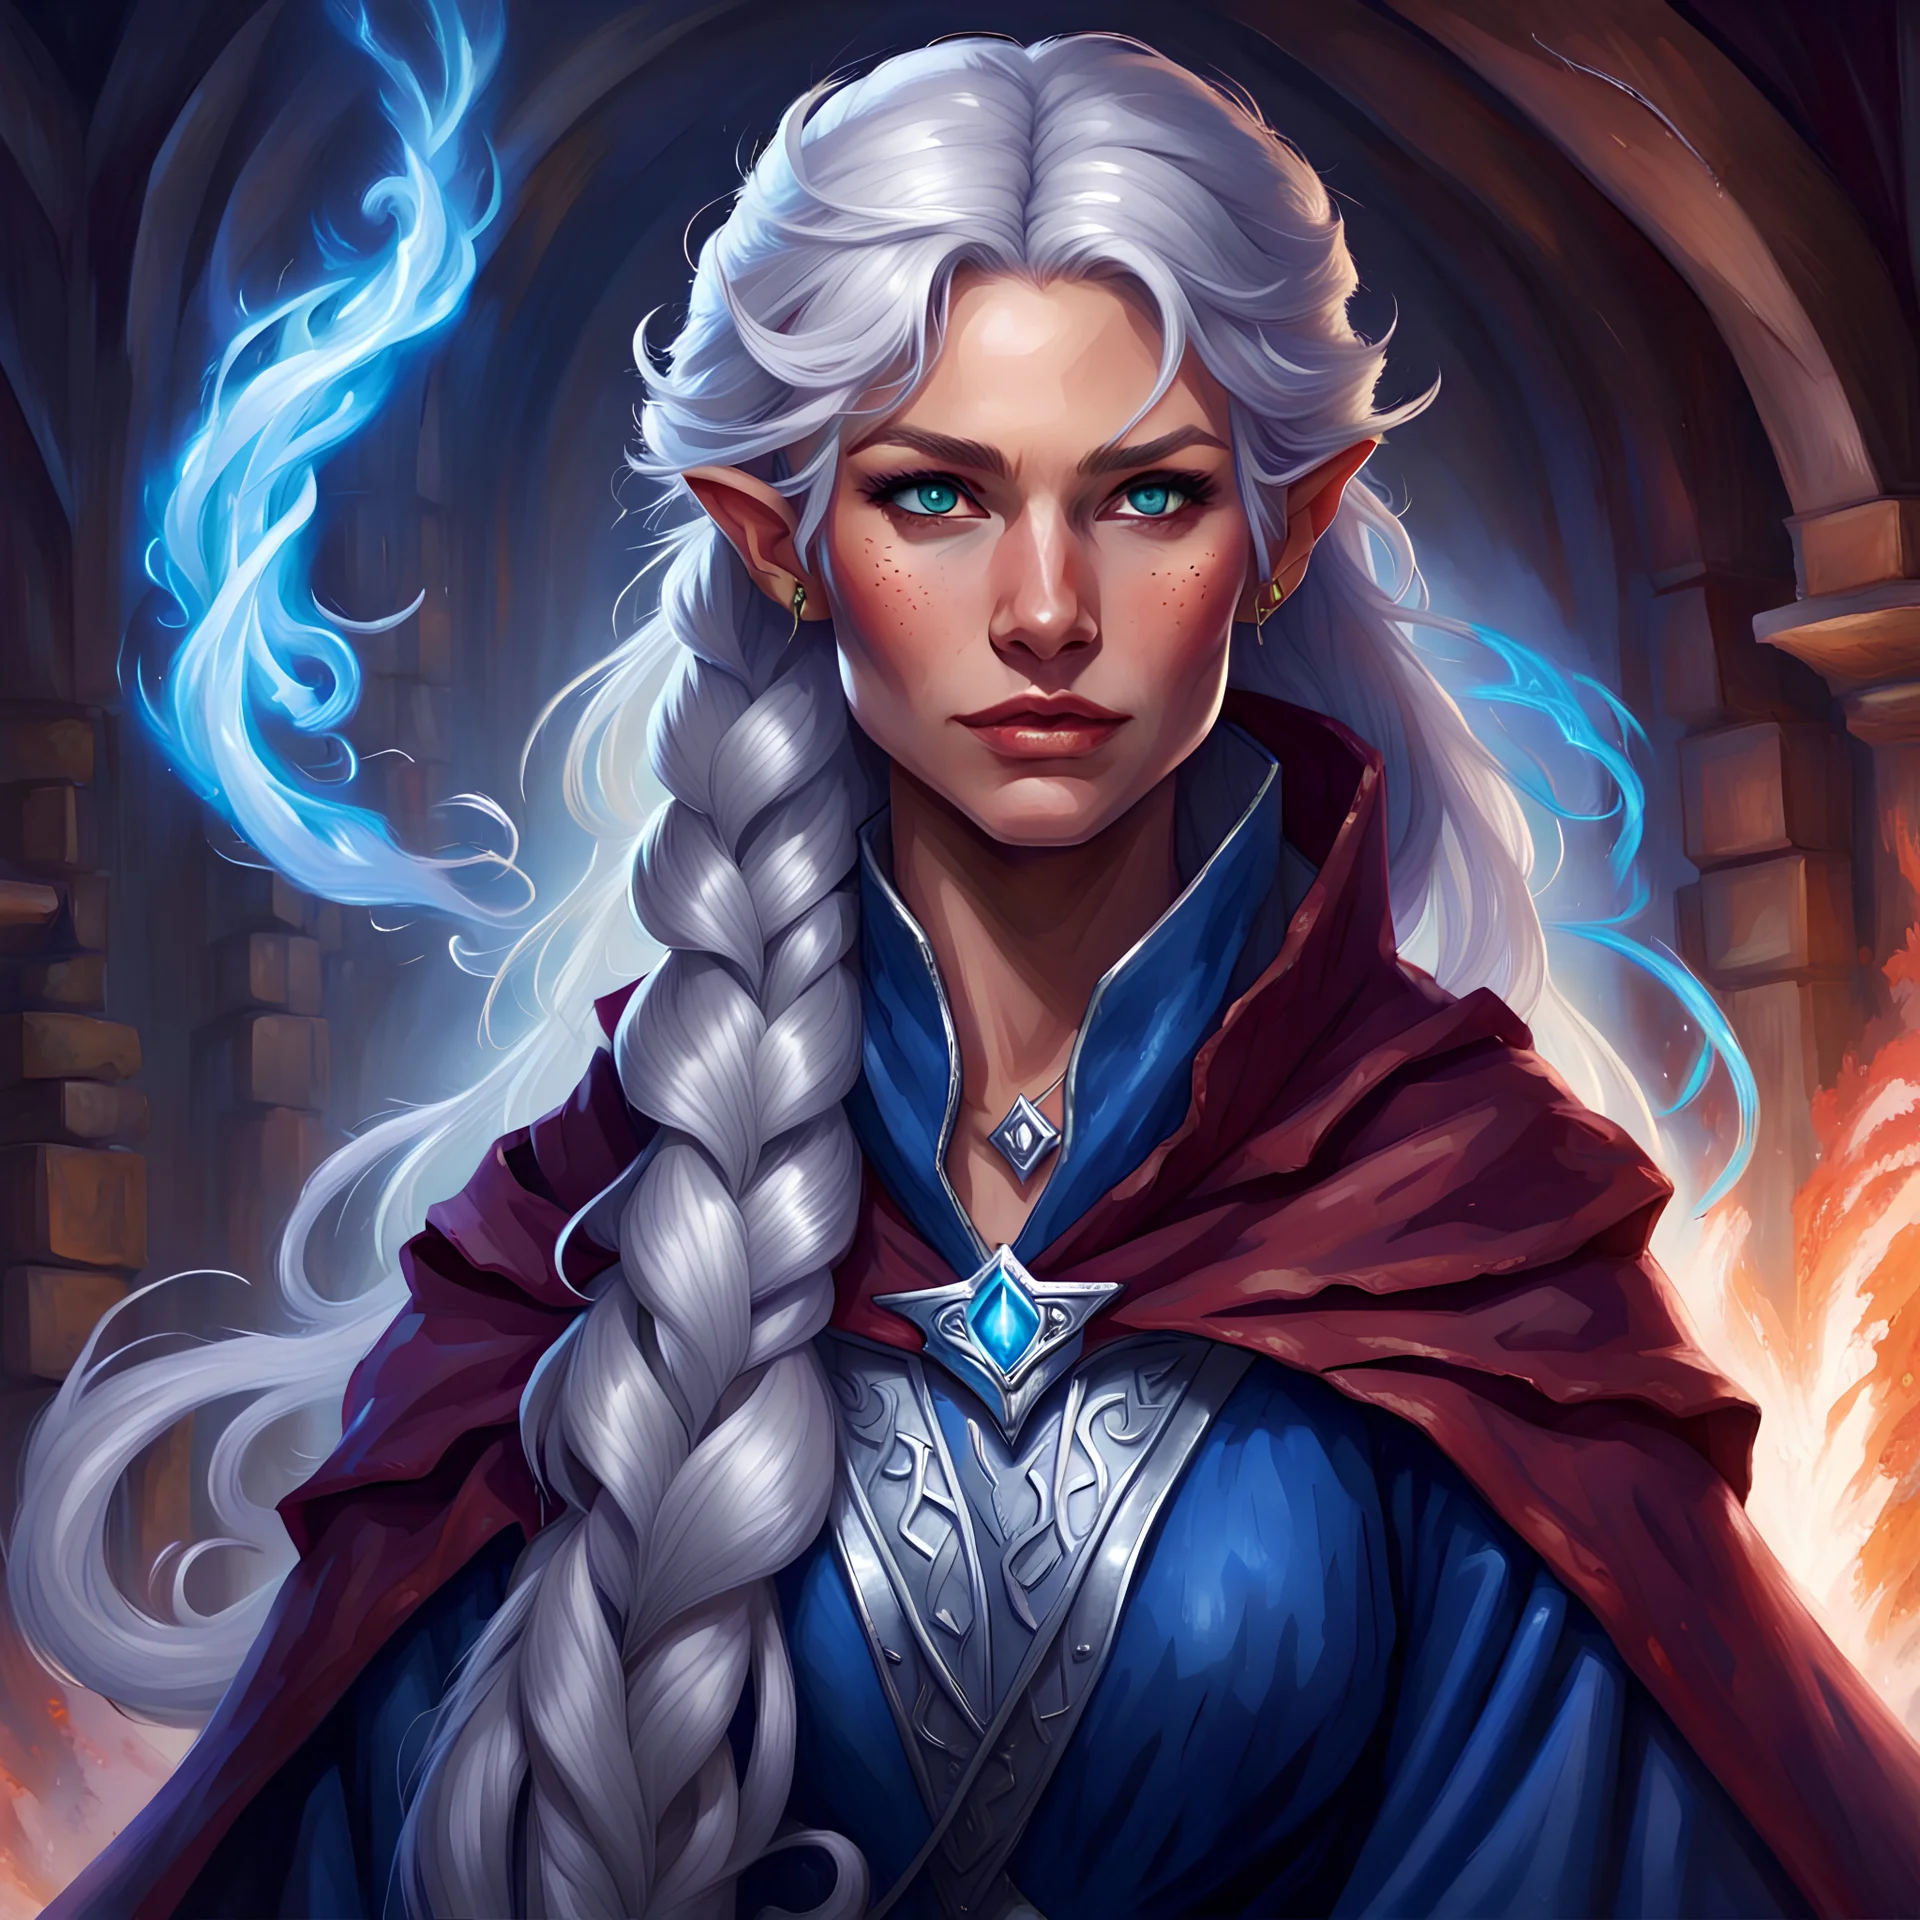 dungeons & dragons; portrait; female; sorcerer; dragonic bloodline; silver hair; braids; blue eyes eyes; cloak; flowing robes; proud, confident